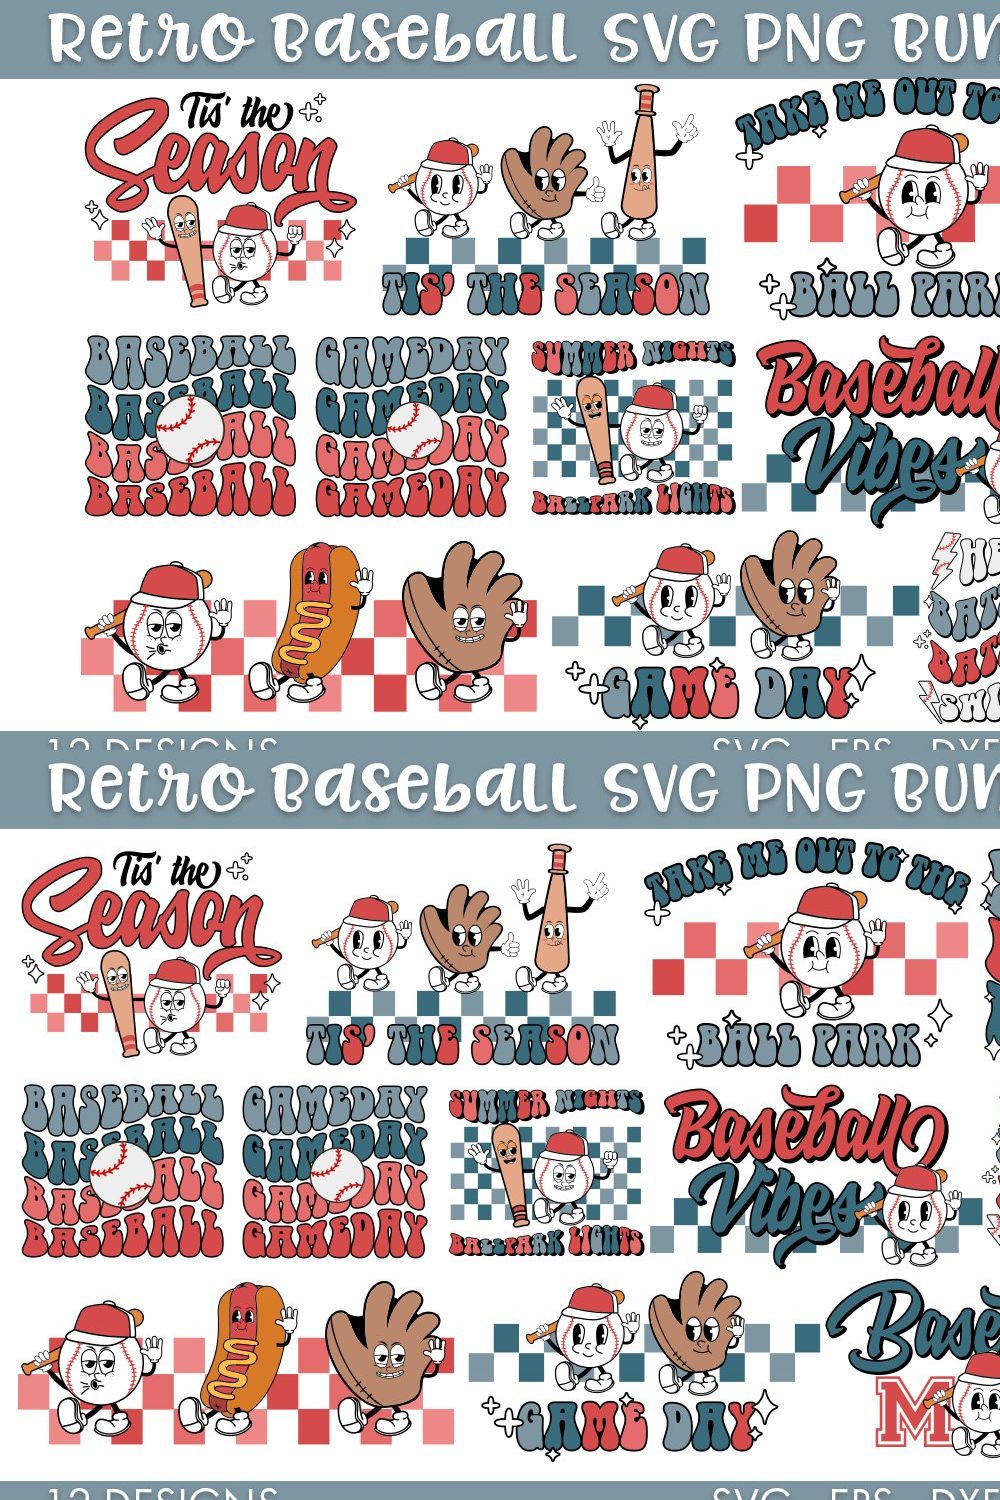 Retro Baseball SVG PNG Bundle pinterest preview image.